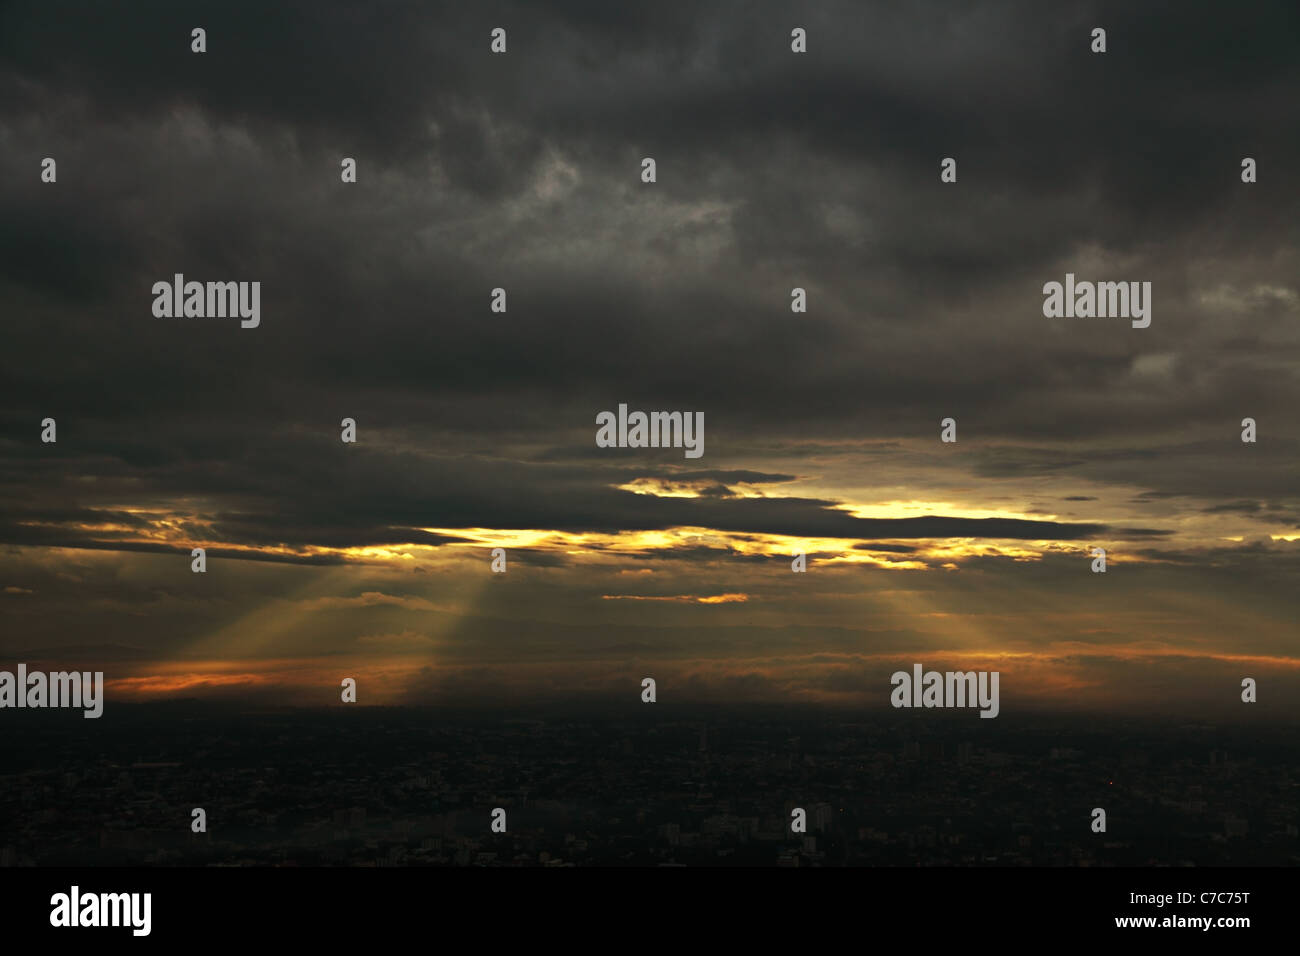 Sunbeams bursting through a dark cloudy sky Stock Photo